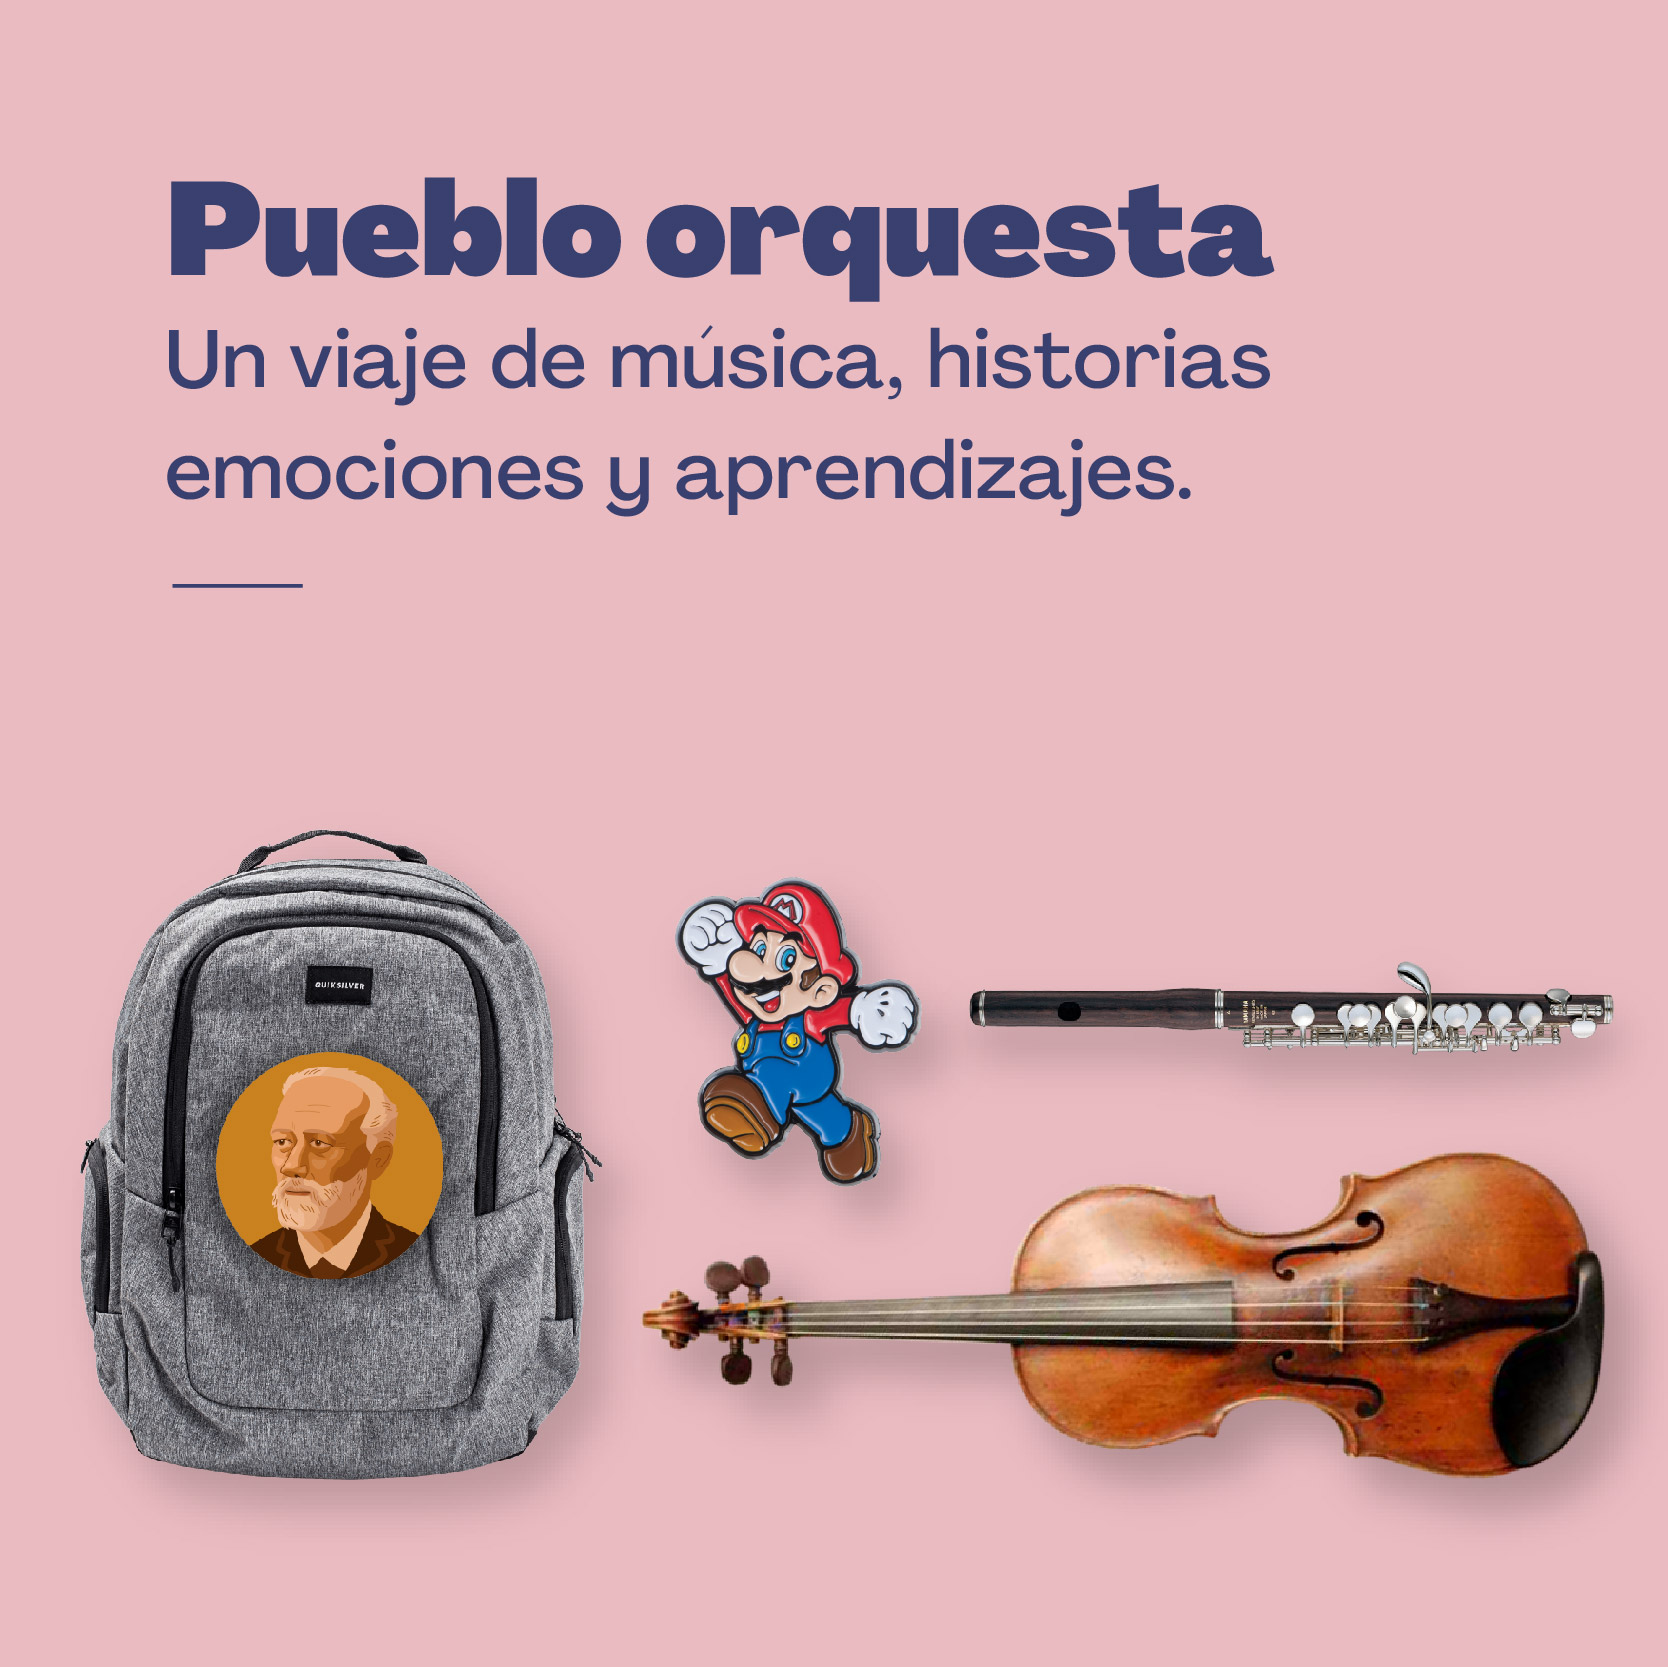 Pueblo orquesta 04